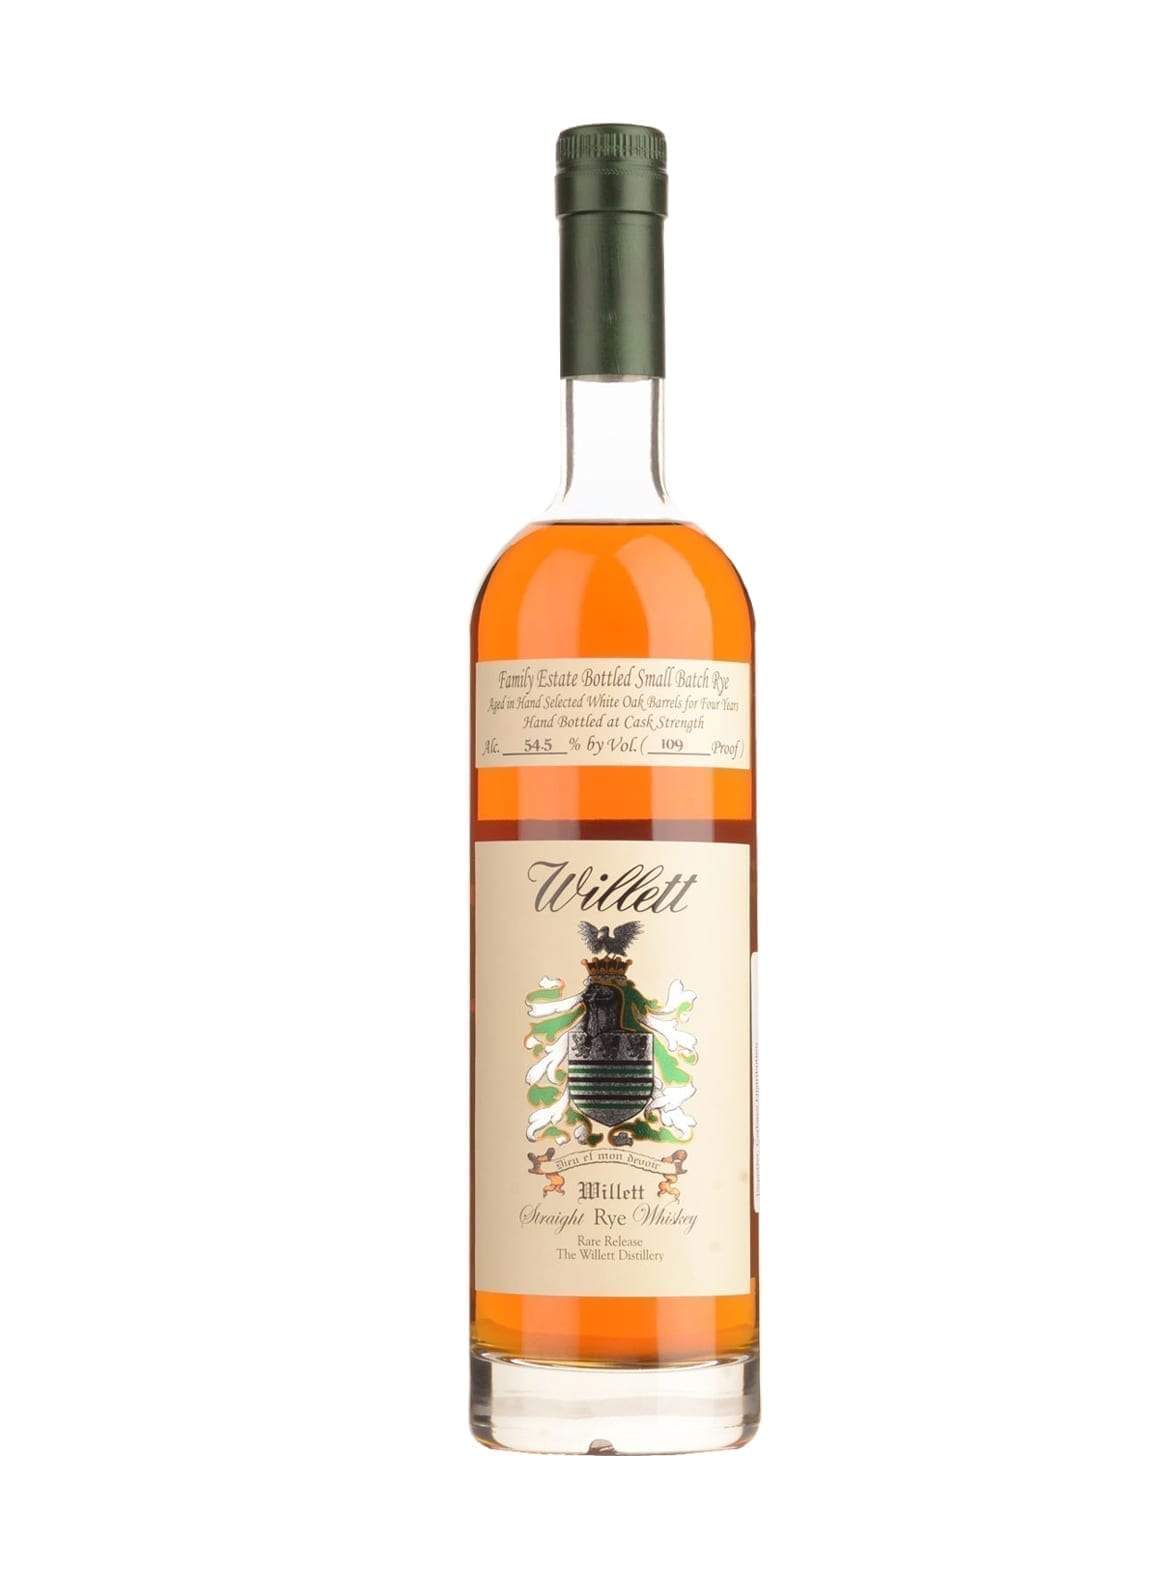 Willett Family Rye Whiskey 4 years Small Batch 54.5% 750ml | Whiskey | Shop online at Spirits of France